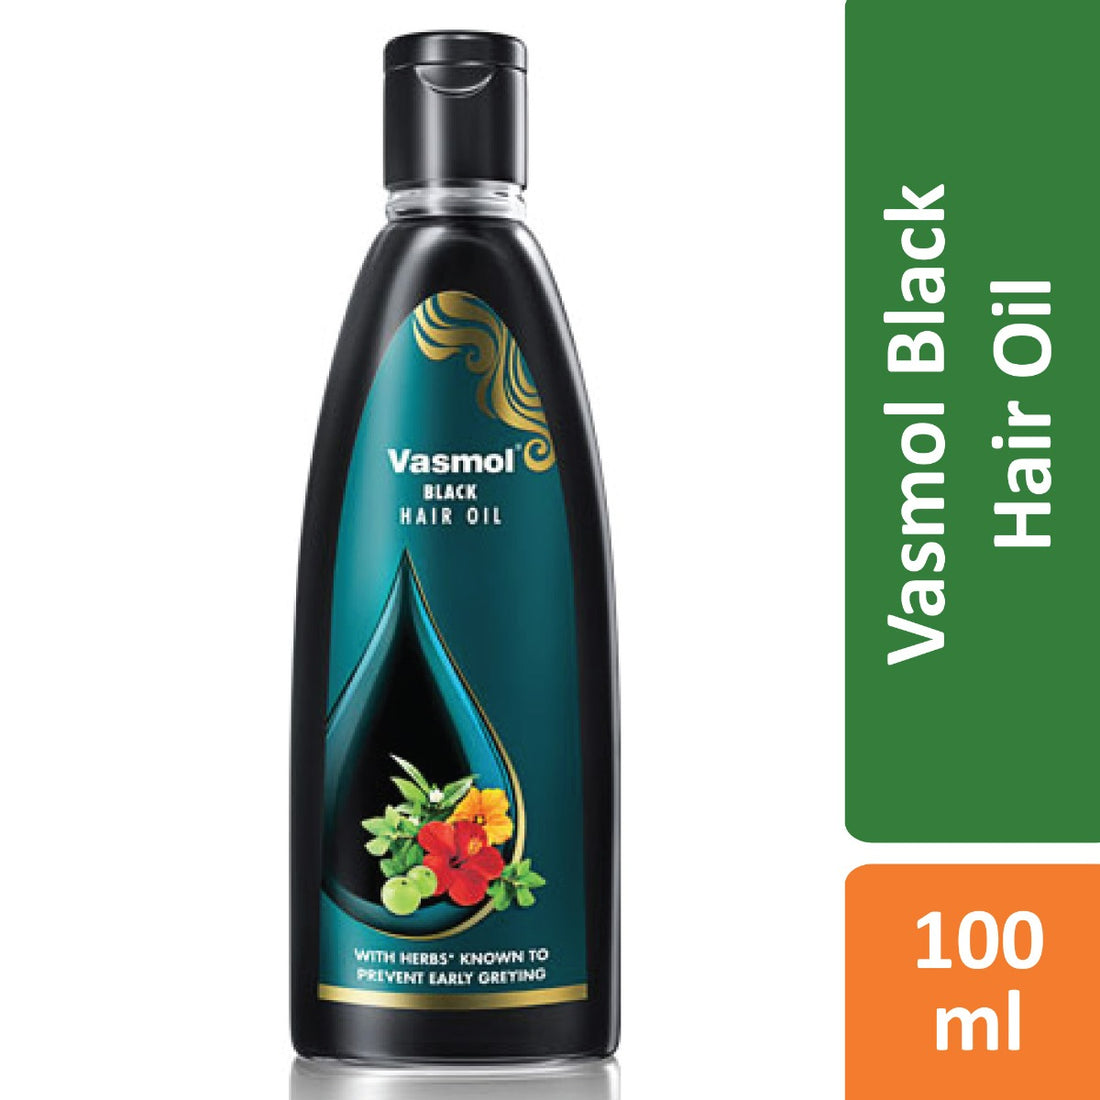 Vasmol Black Hair Oil